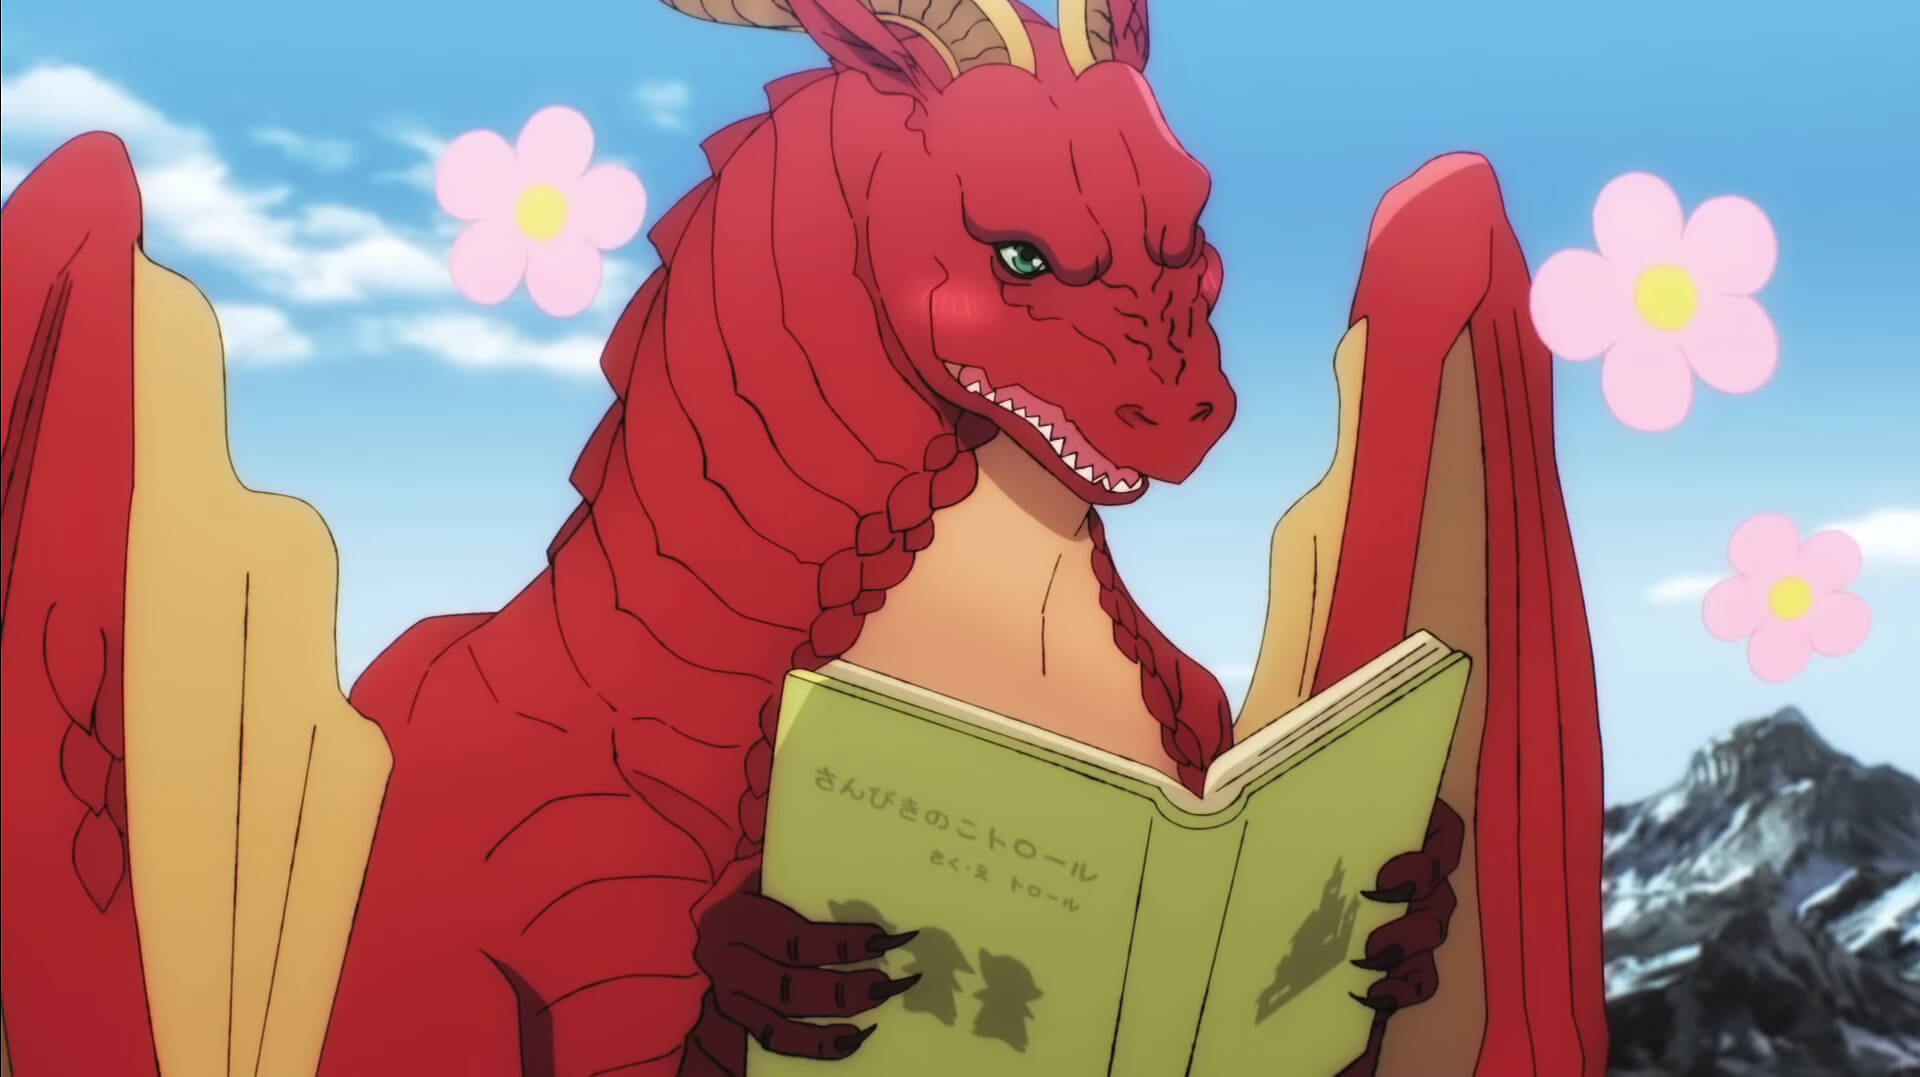 Visual Terbaru Anime Dragon, Ie o Kau Perlihatkan Seluruh Karakter Utama